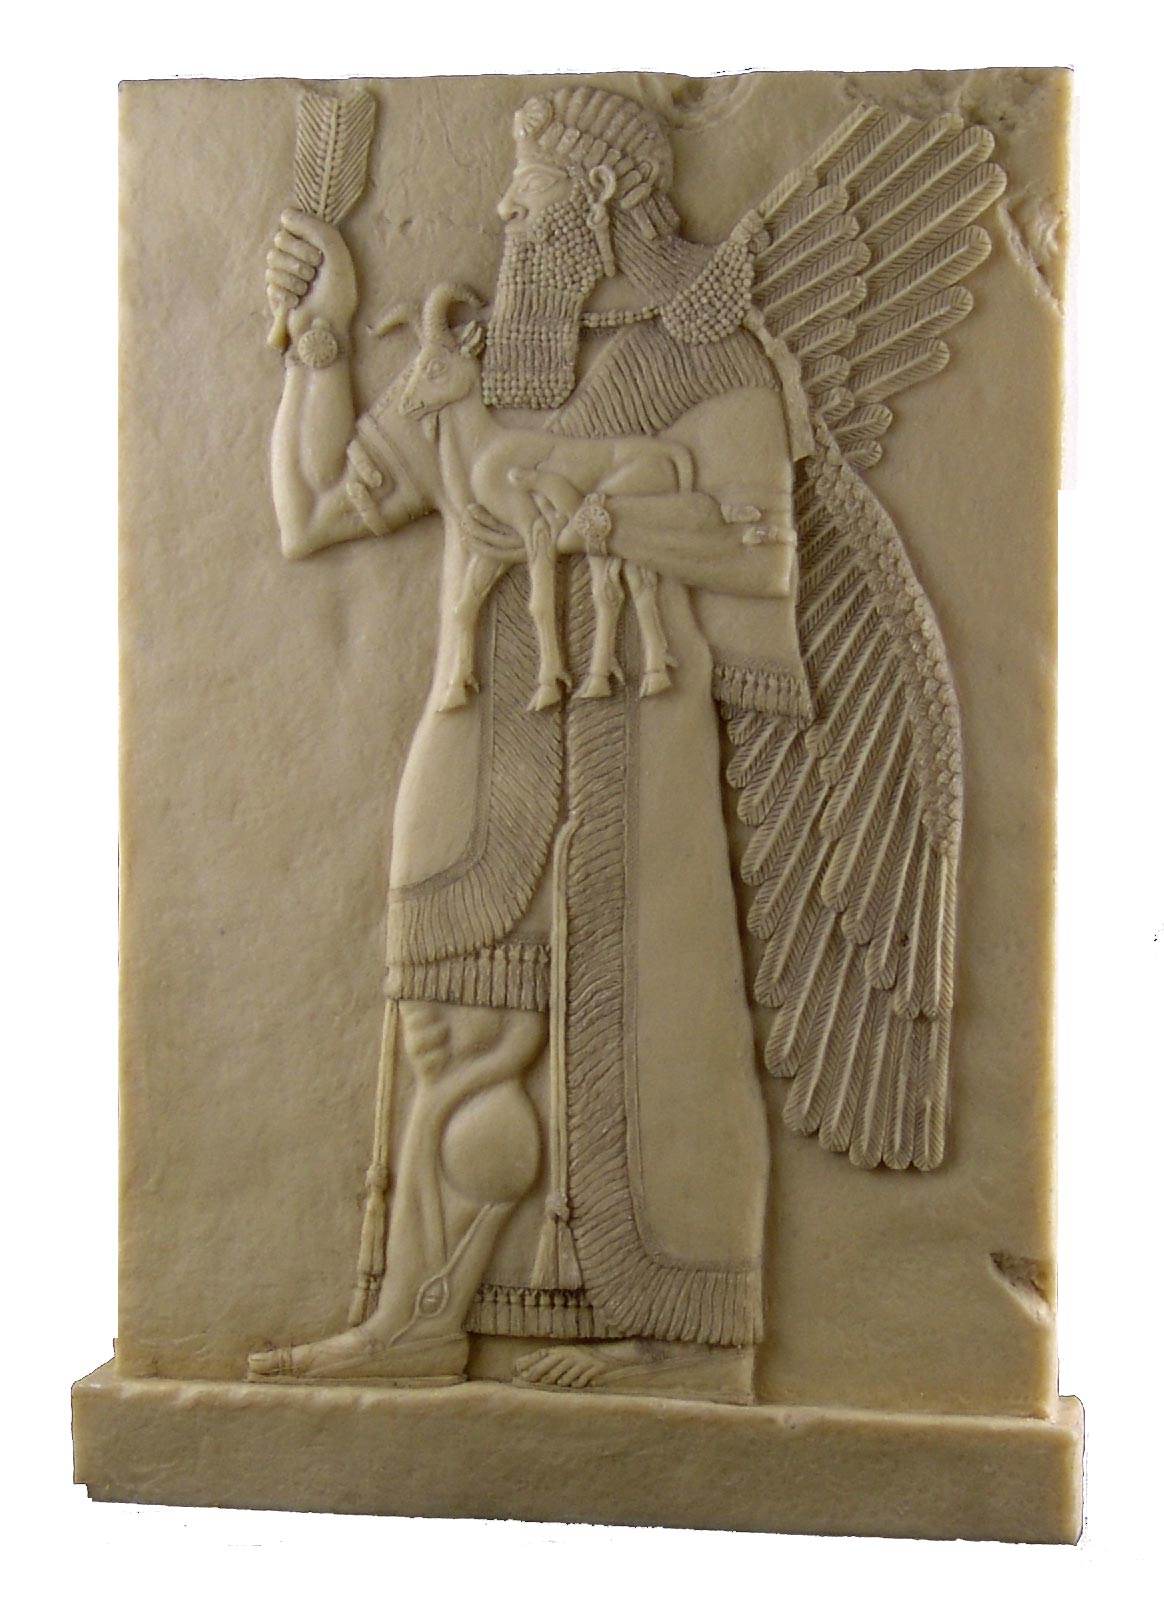 "Apkallu" Assyrian Sumerian demigods standing relief